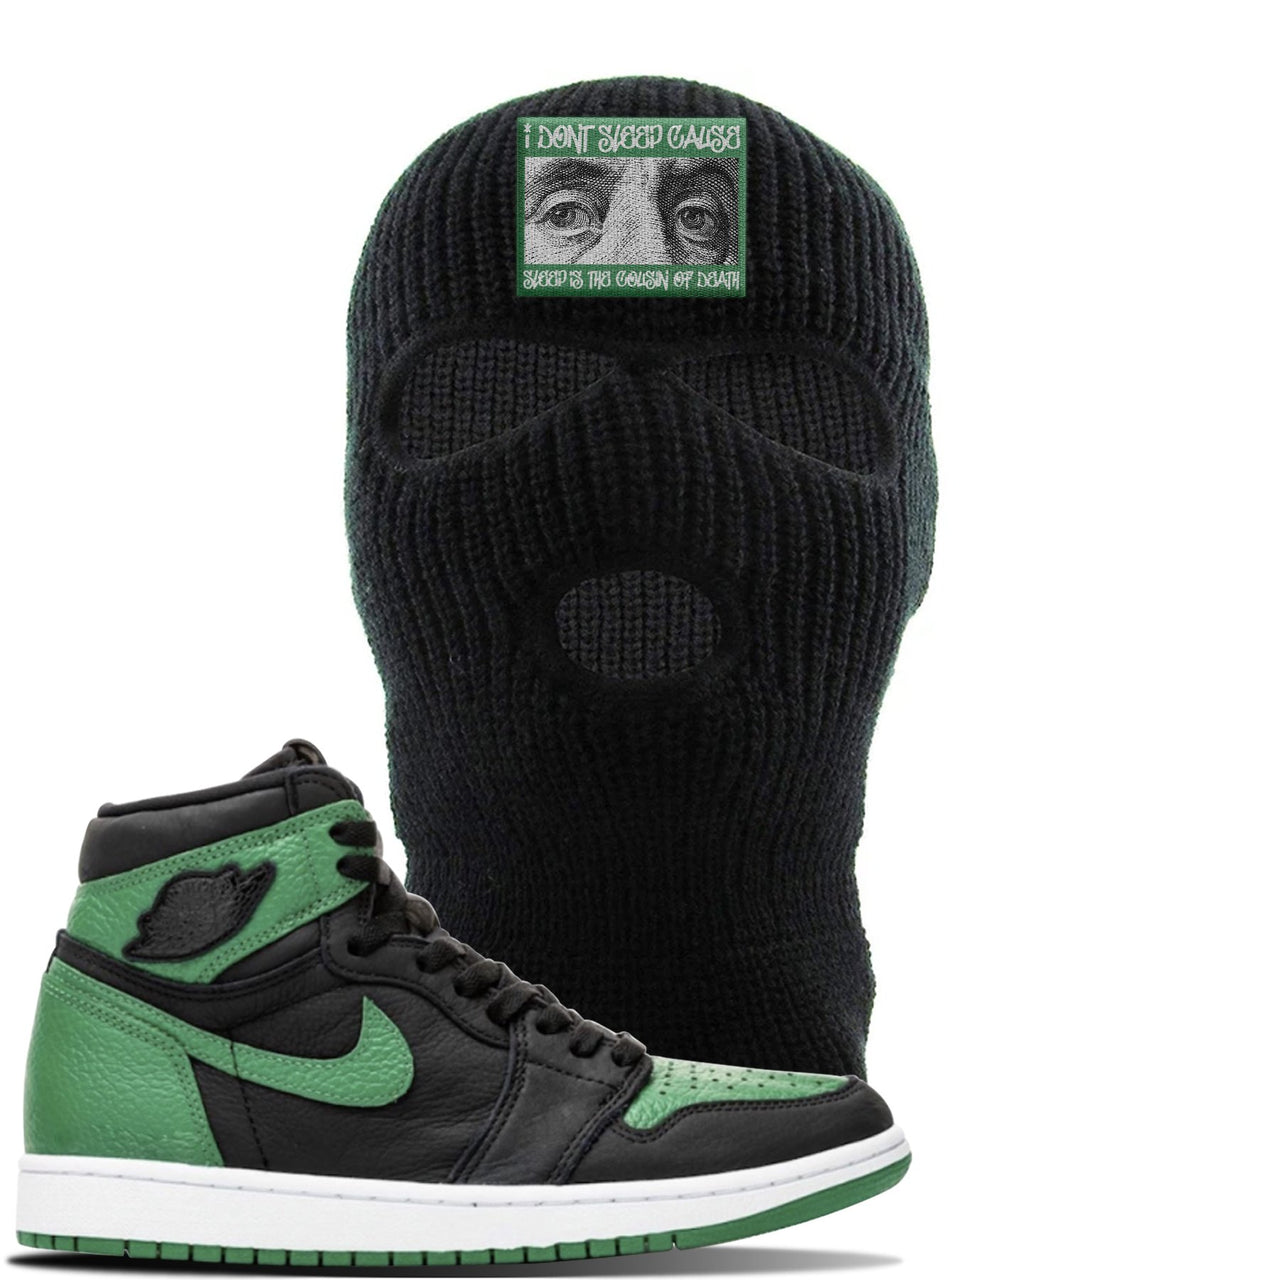 Jordan 1 Retro High OG Pine Green Gym Sneaker Black Ski Mask | Hat to match Air Jordan 1 Retro High OG Pine Green Gym Shoes | Franklin Eyes